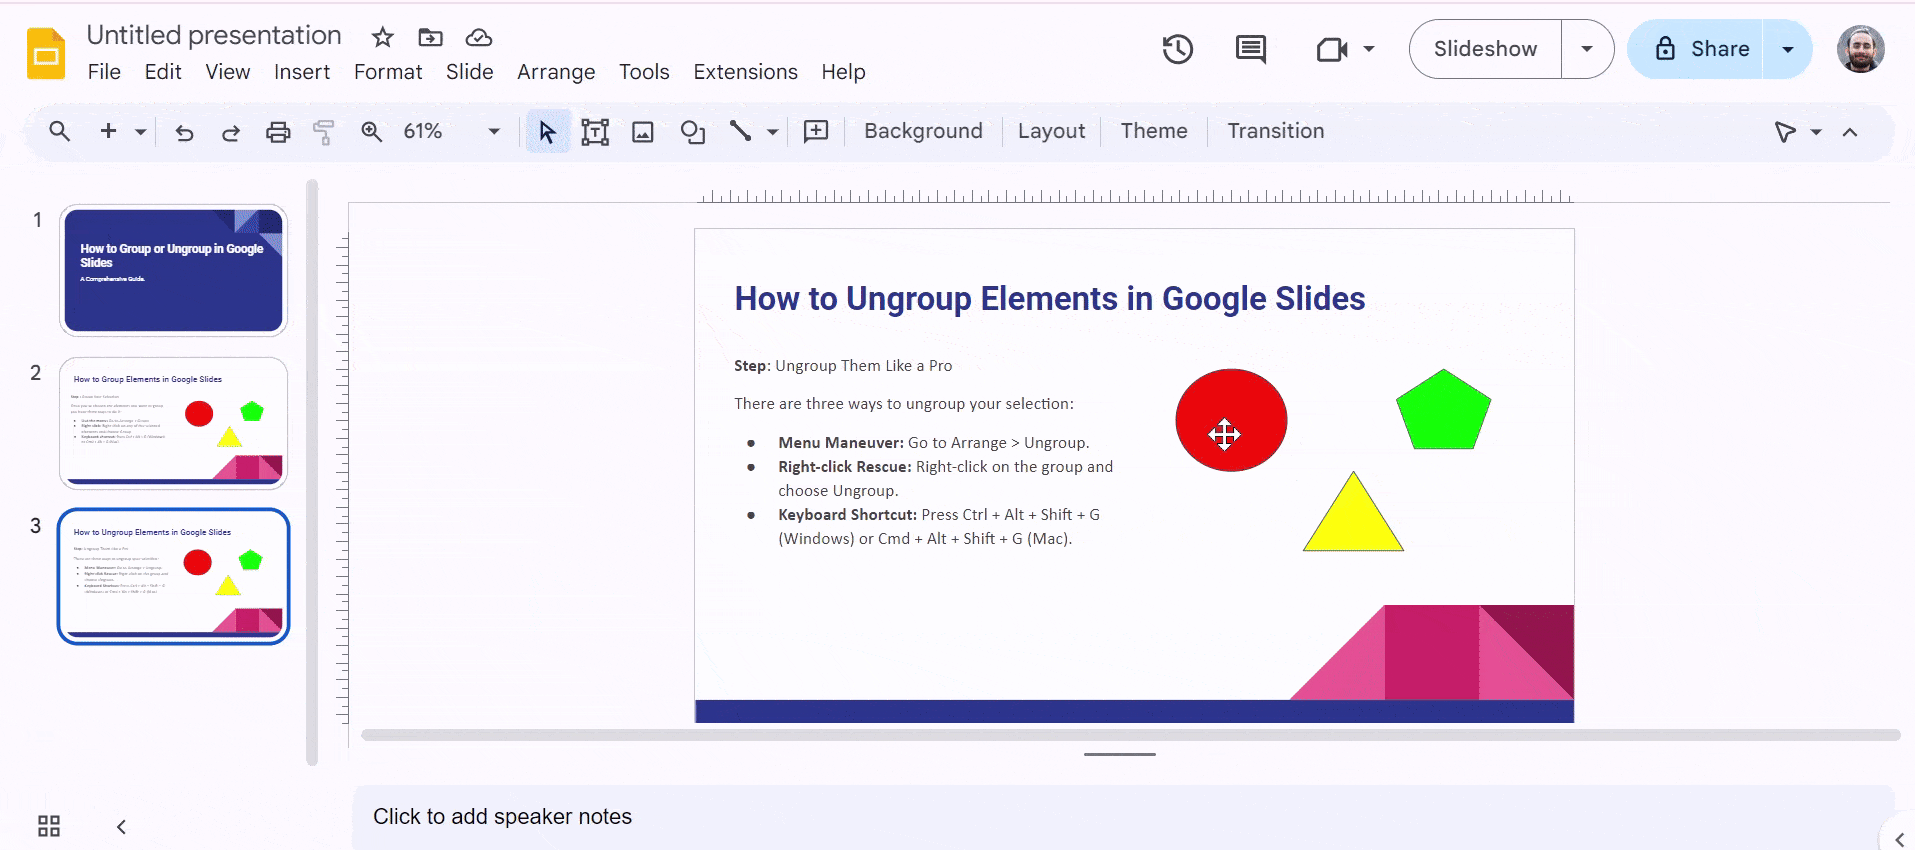 Ungroup Elements in Google Slides